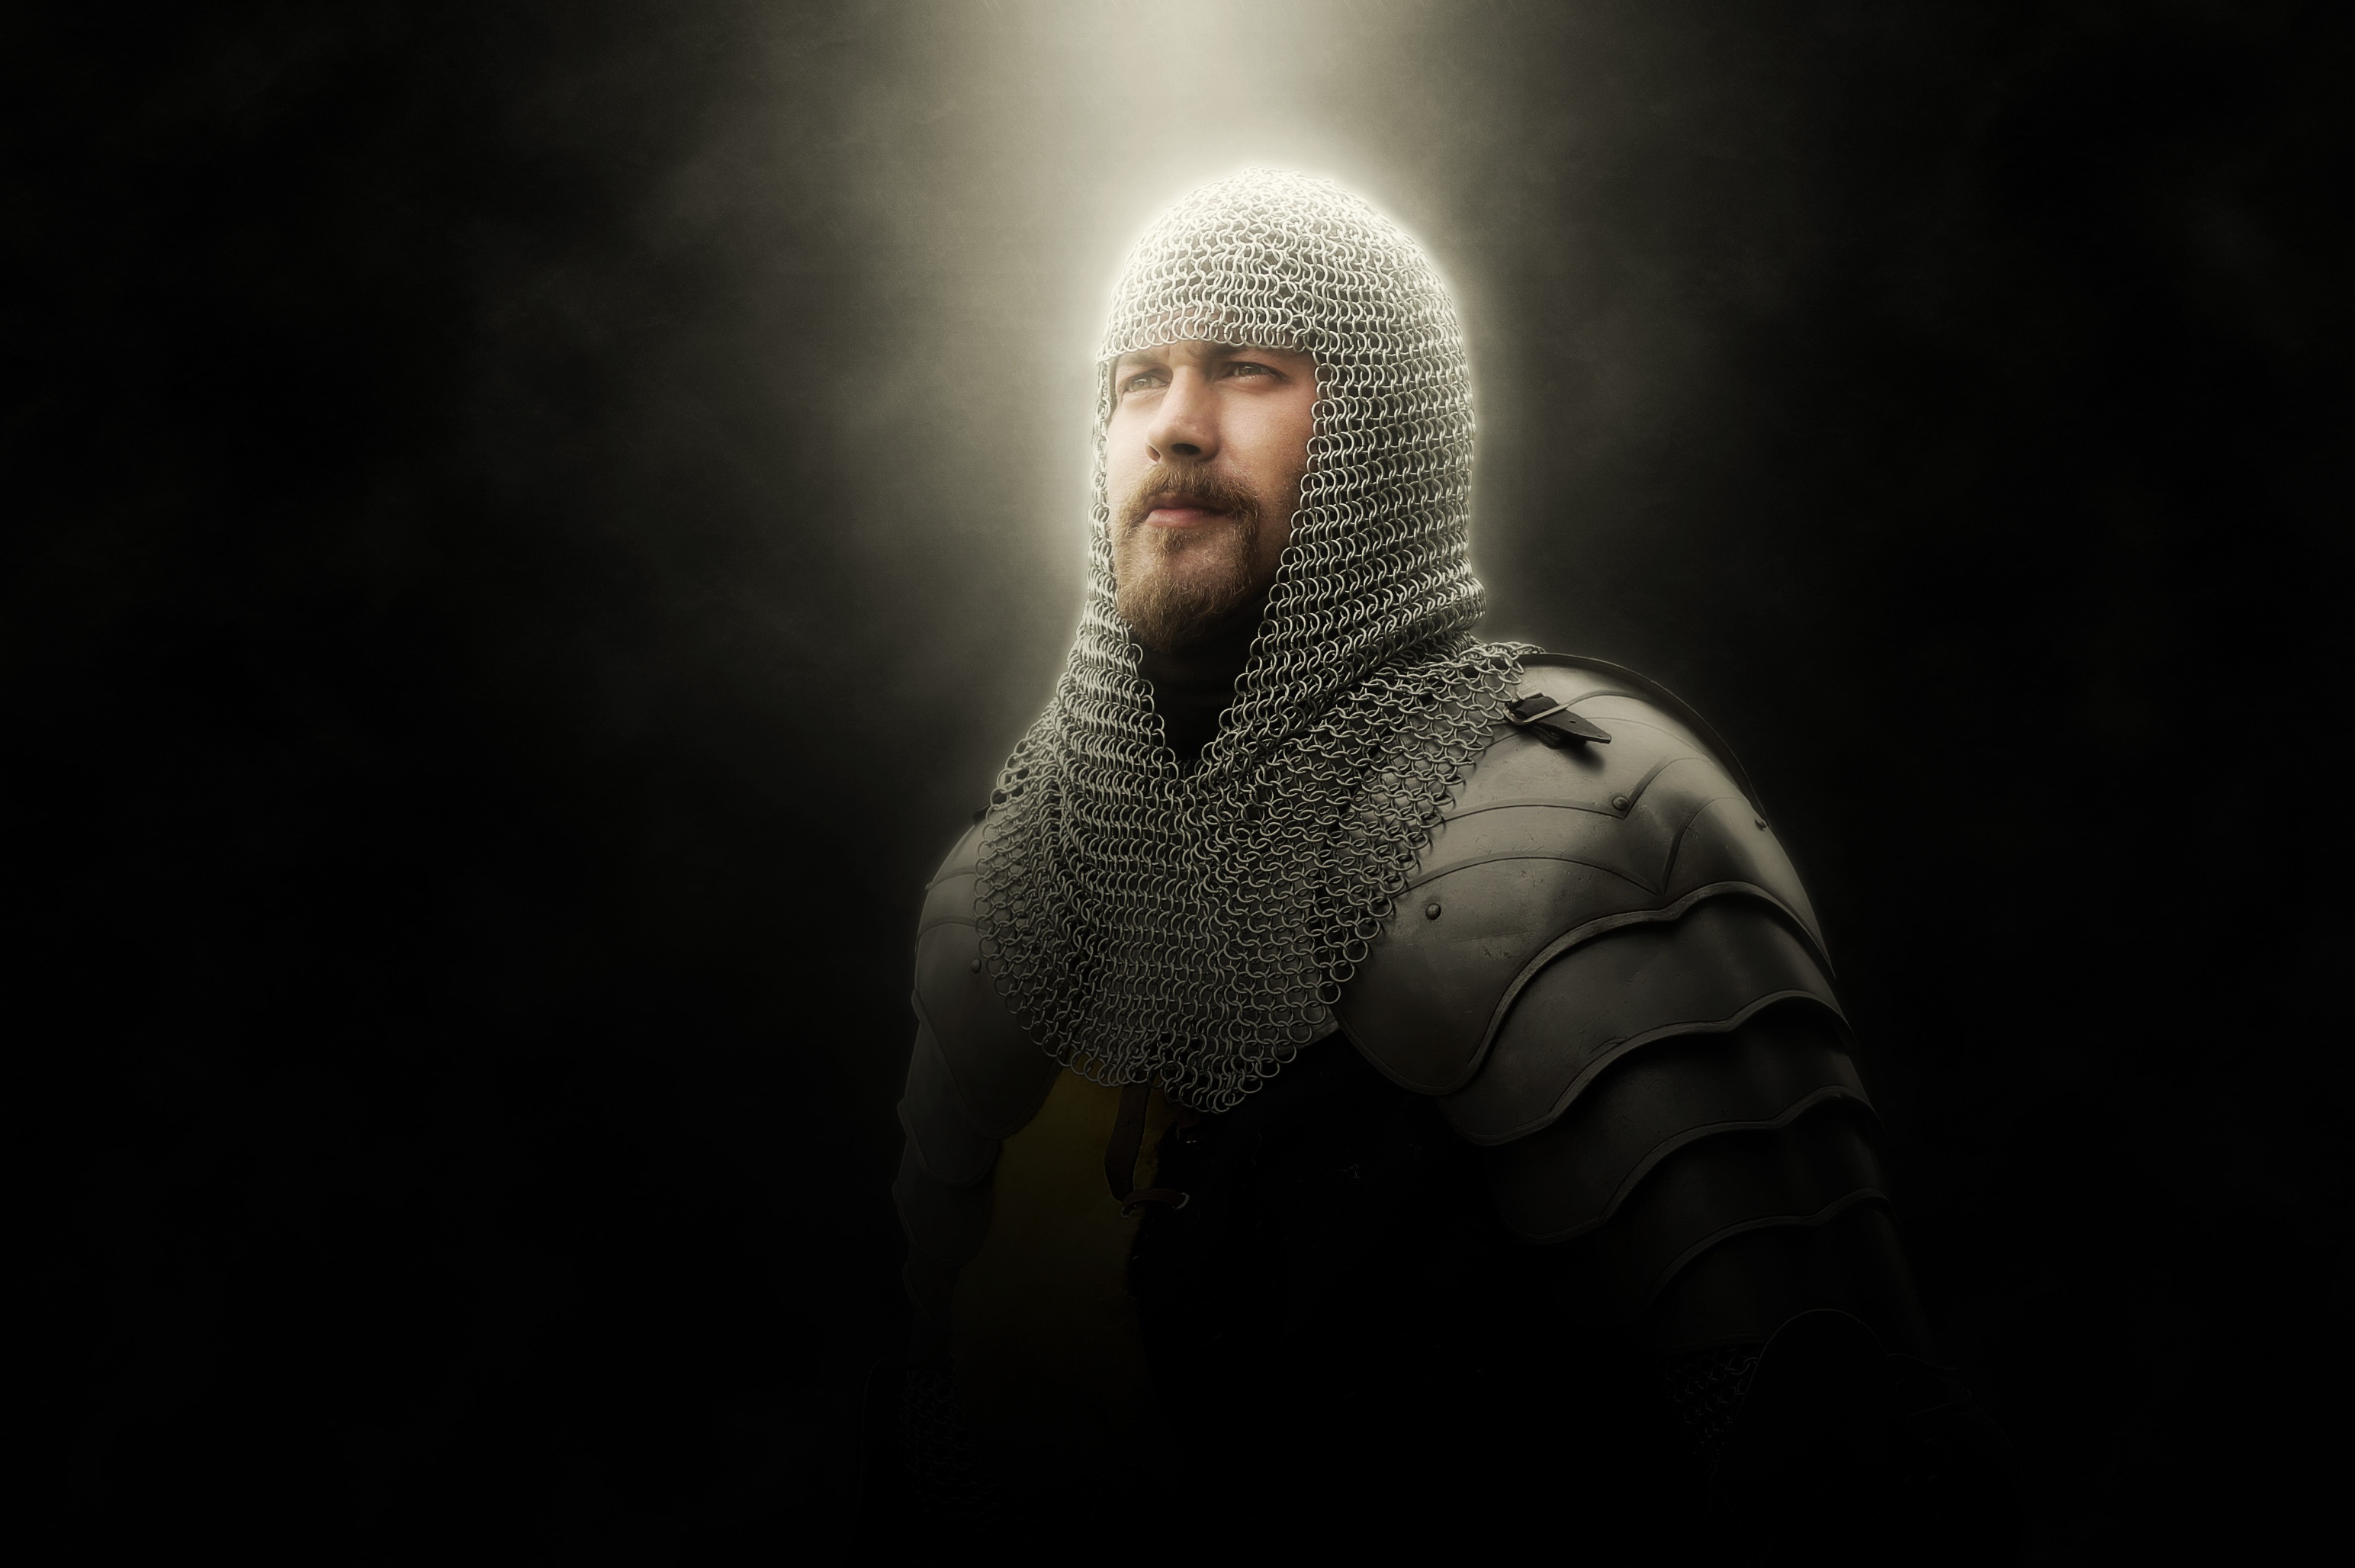 Knight in shinning armor